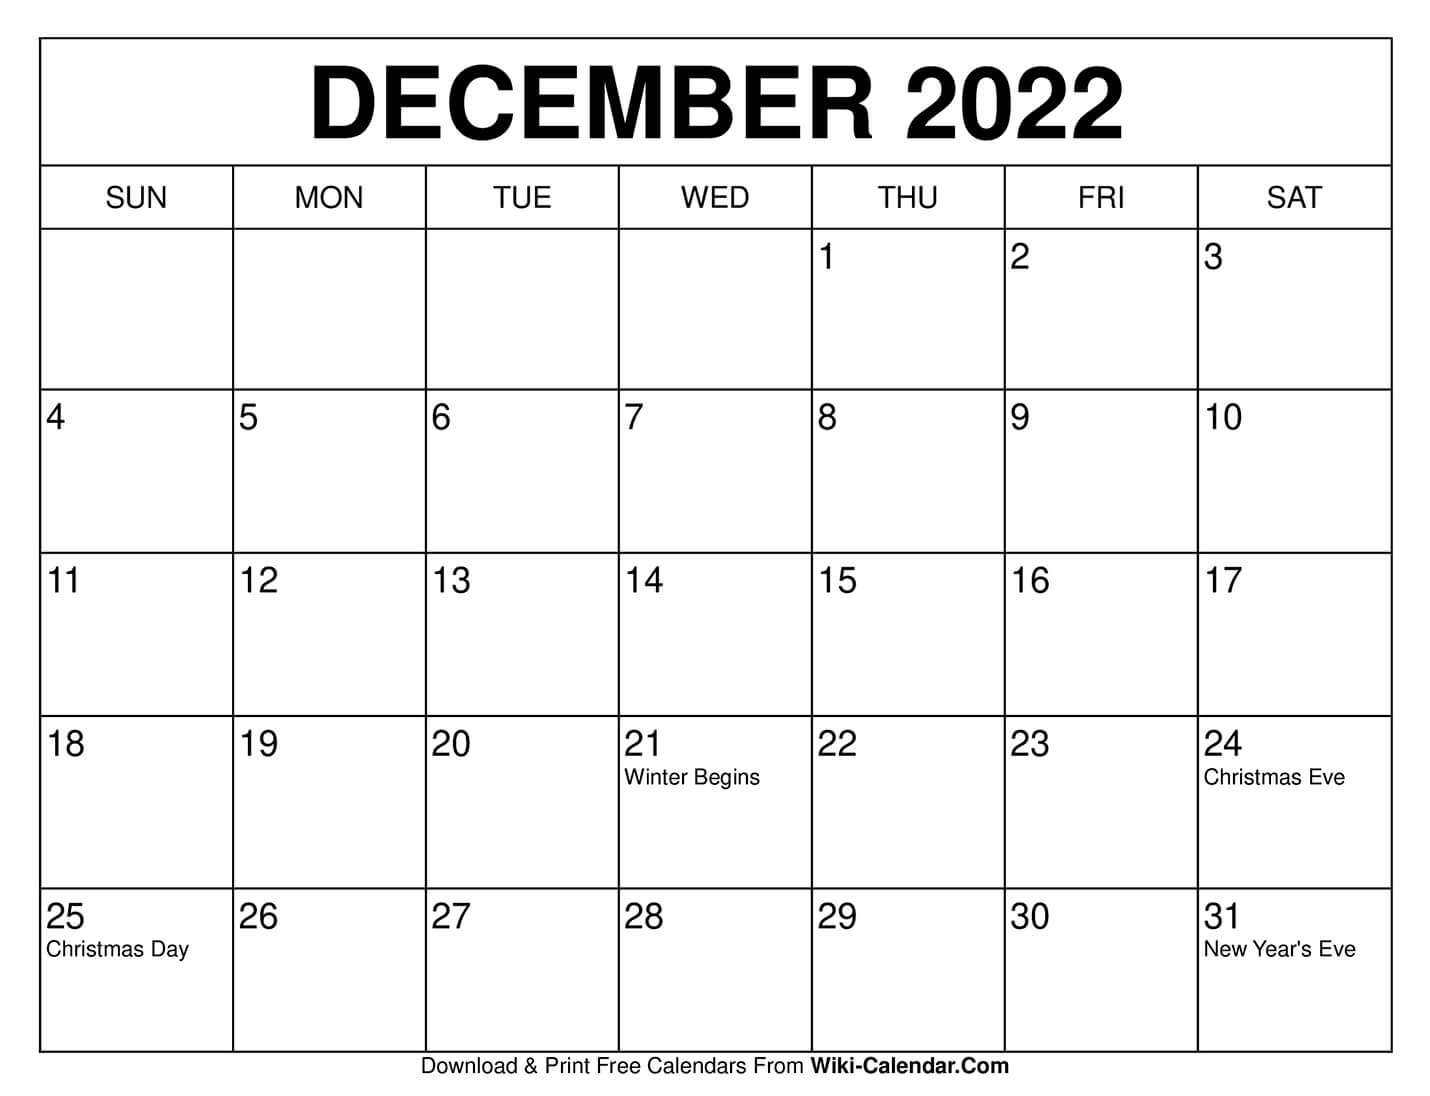 Free Printable December 2021 Calendars